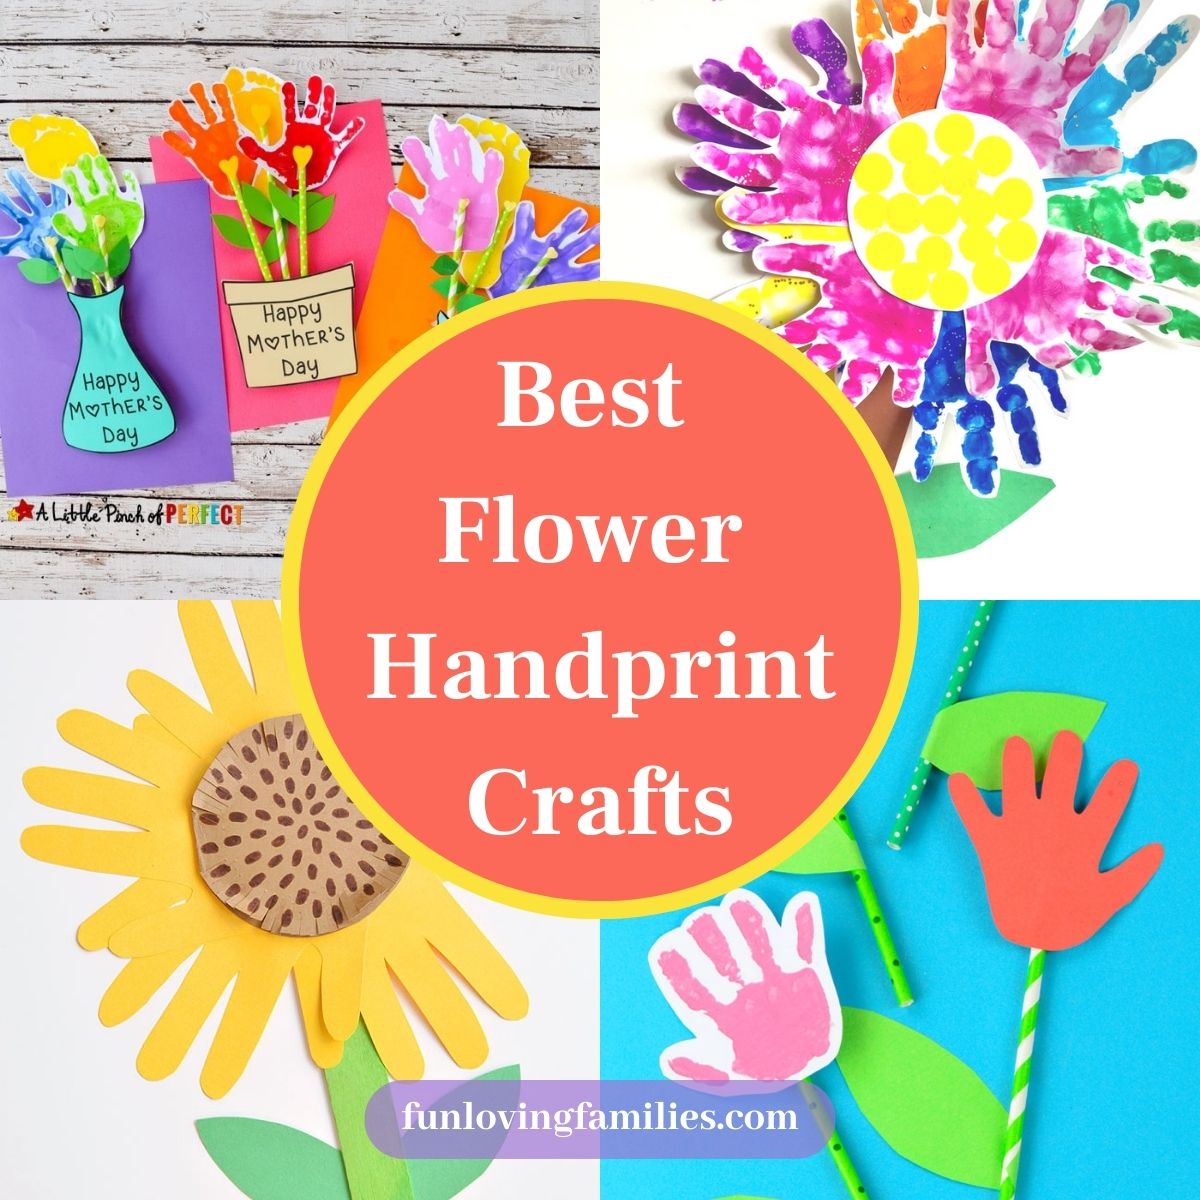 Best Flower Handprint Crafts and Ideas